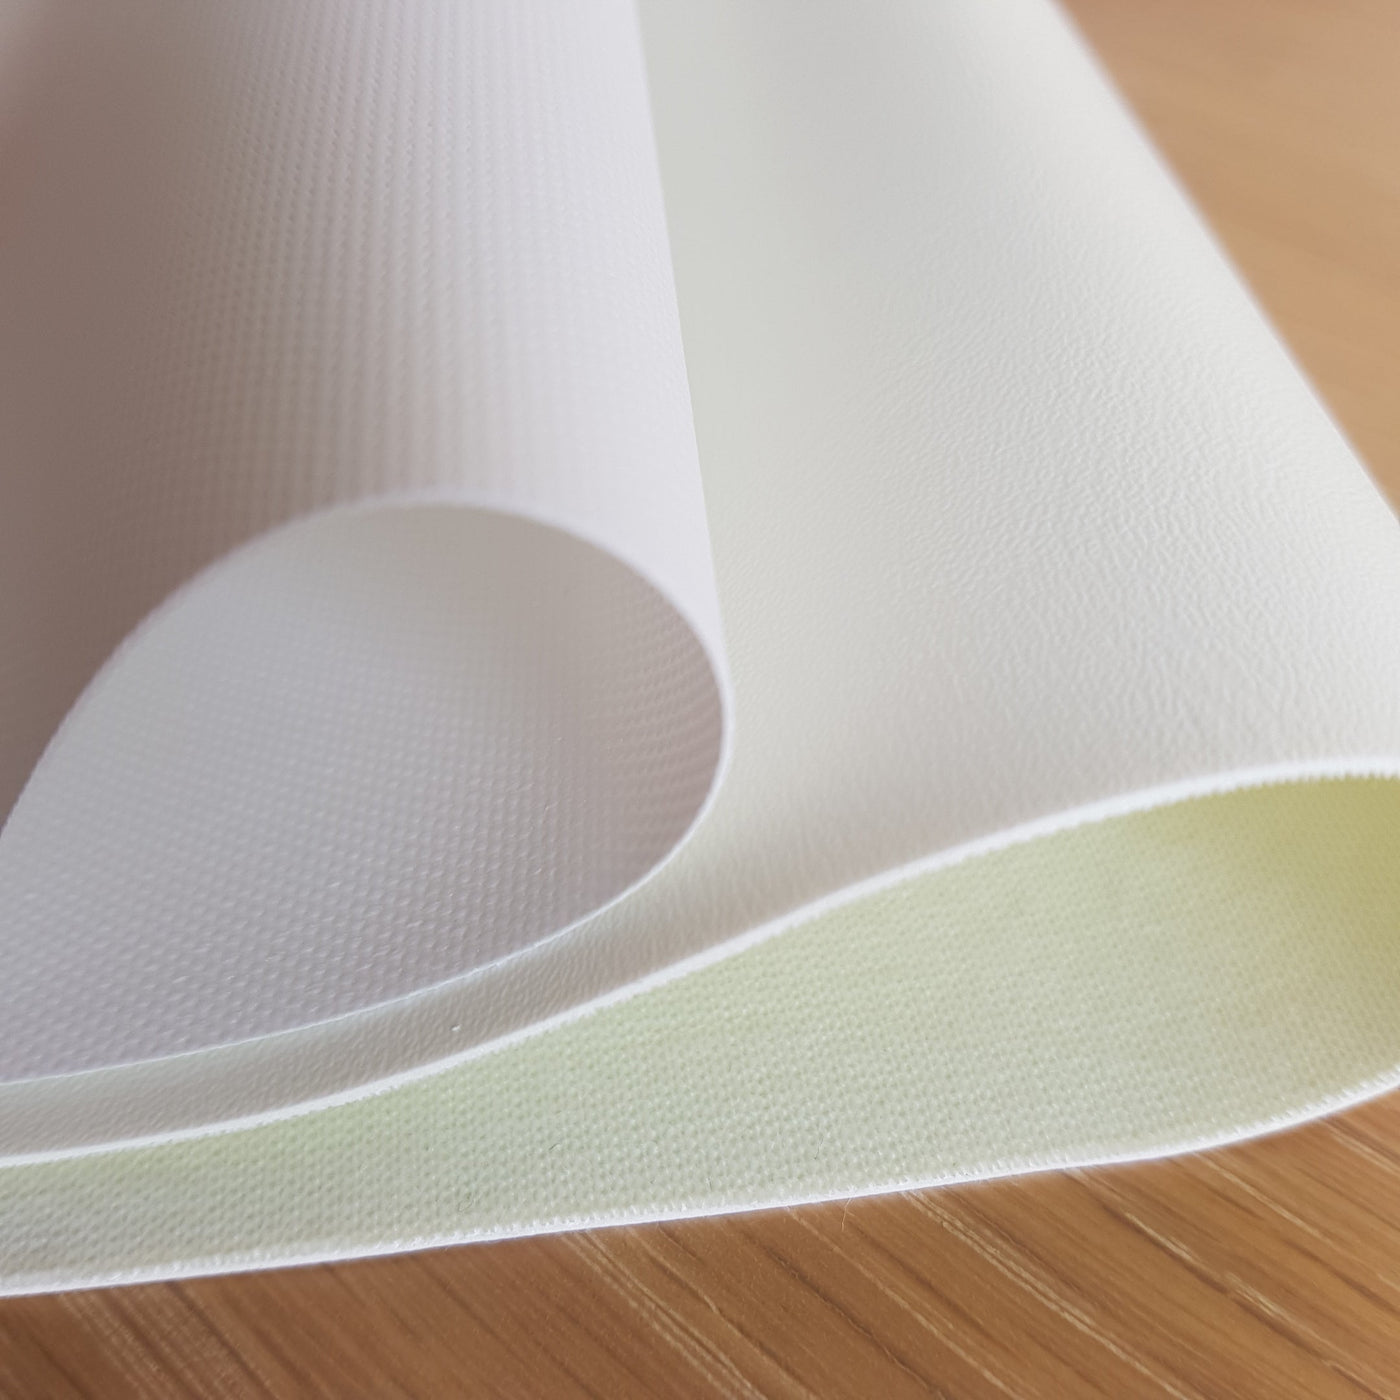 Maltesse - cotton de tulear - Pu Leather vinyl - canvas - choose Fabric material Sheets